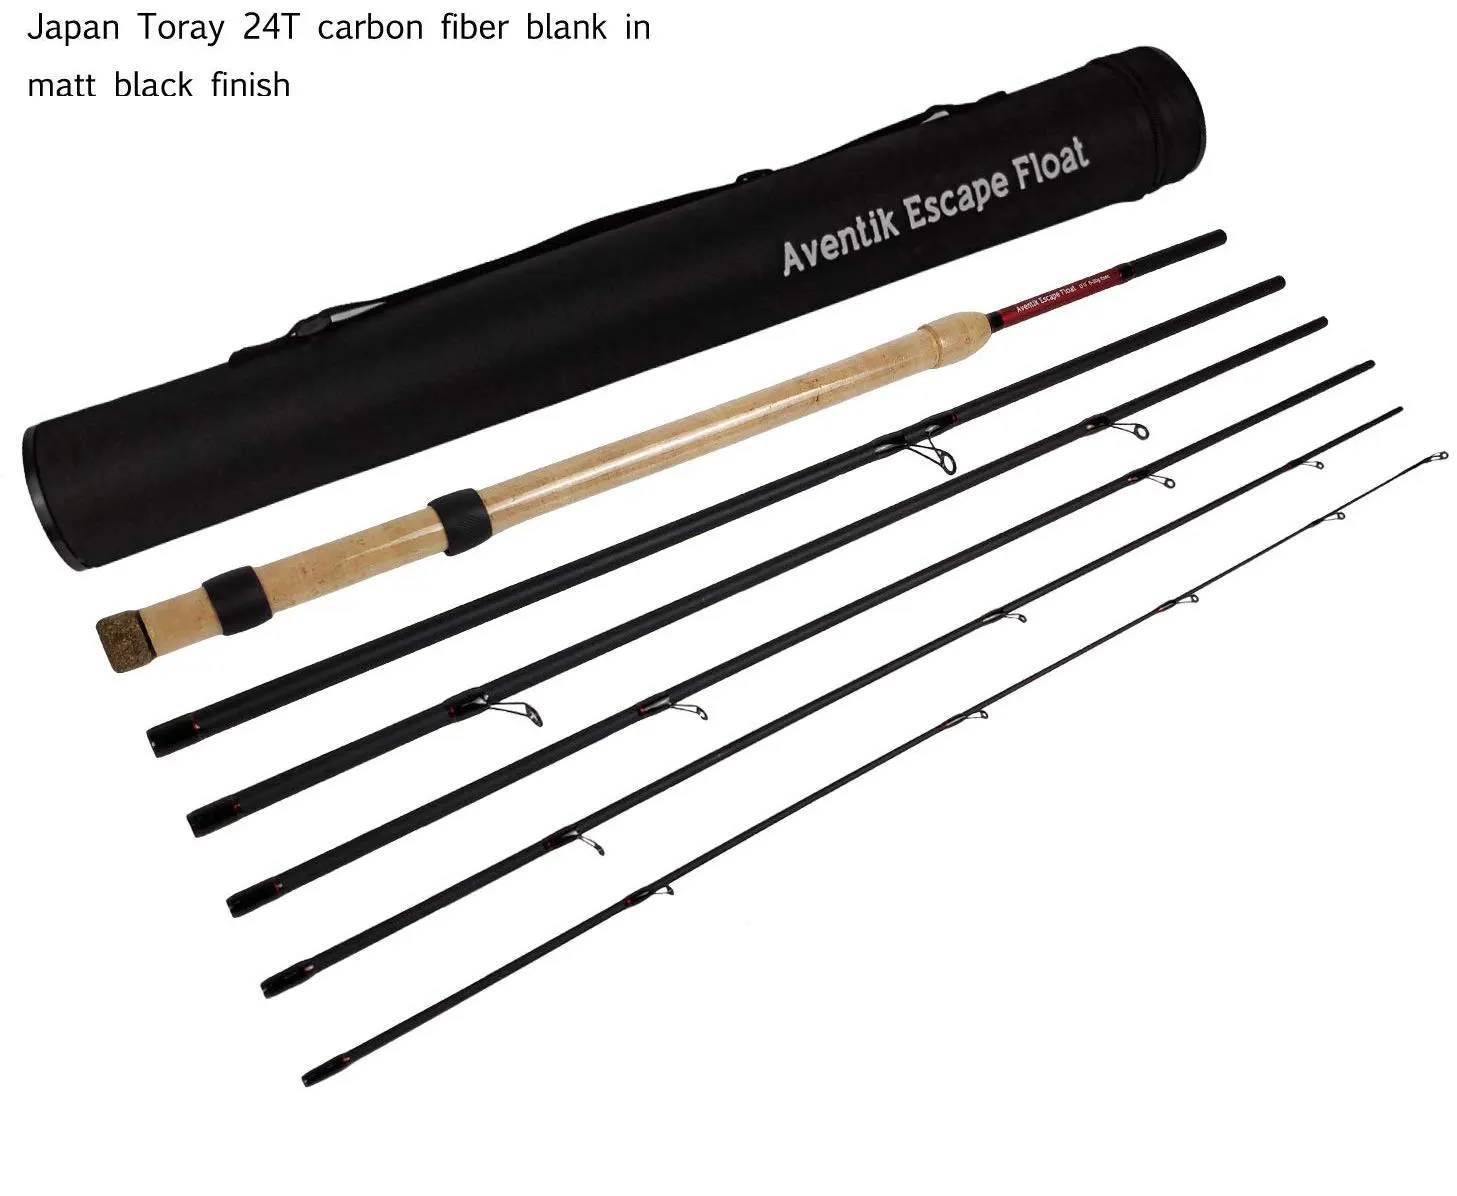 Floating fishing rod 13'0'' 6-20g 6sec Japan Toray 24T carbon fiber blank in matt black finish (B07)